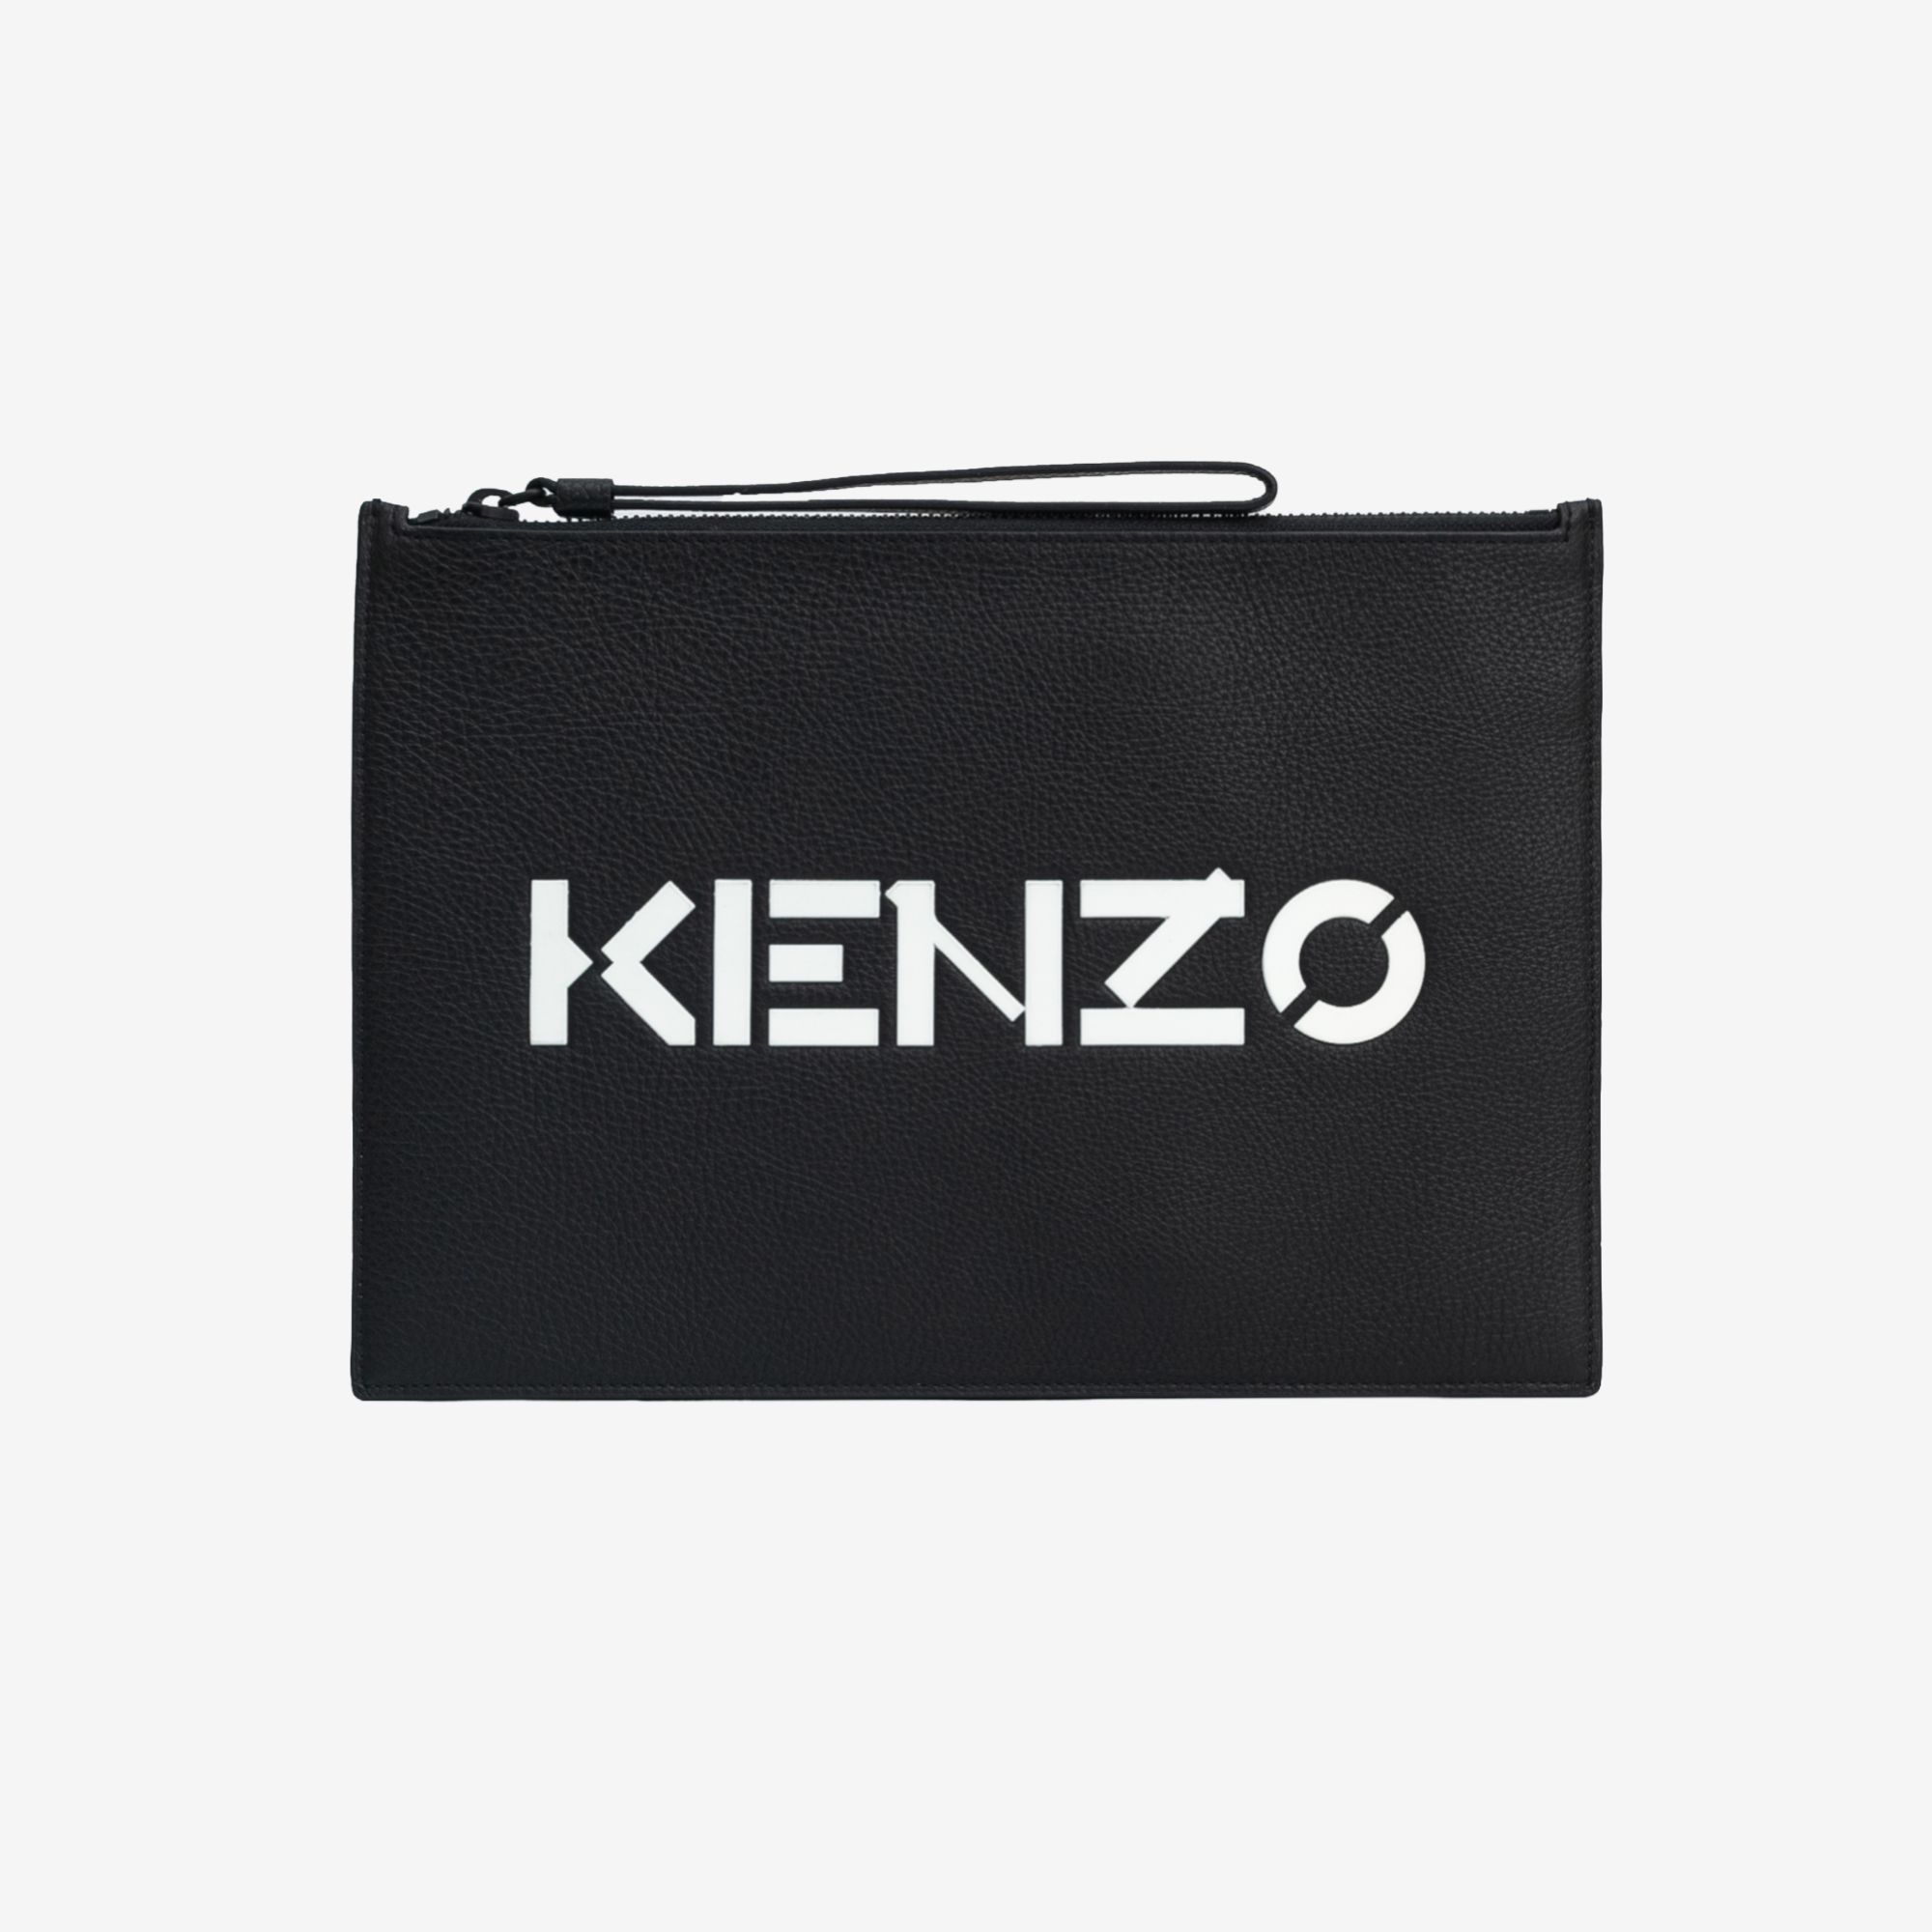  KENZO Logo Large Leather Clutch - Black/White 